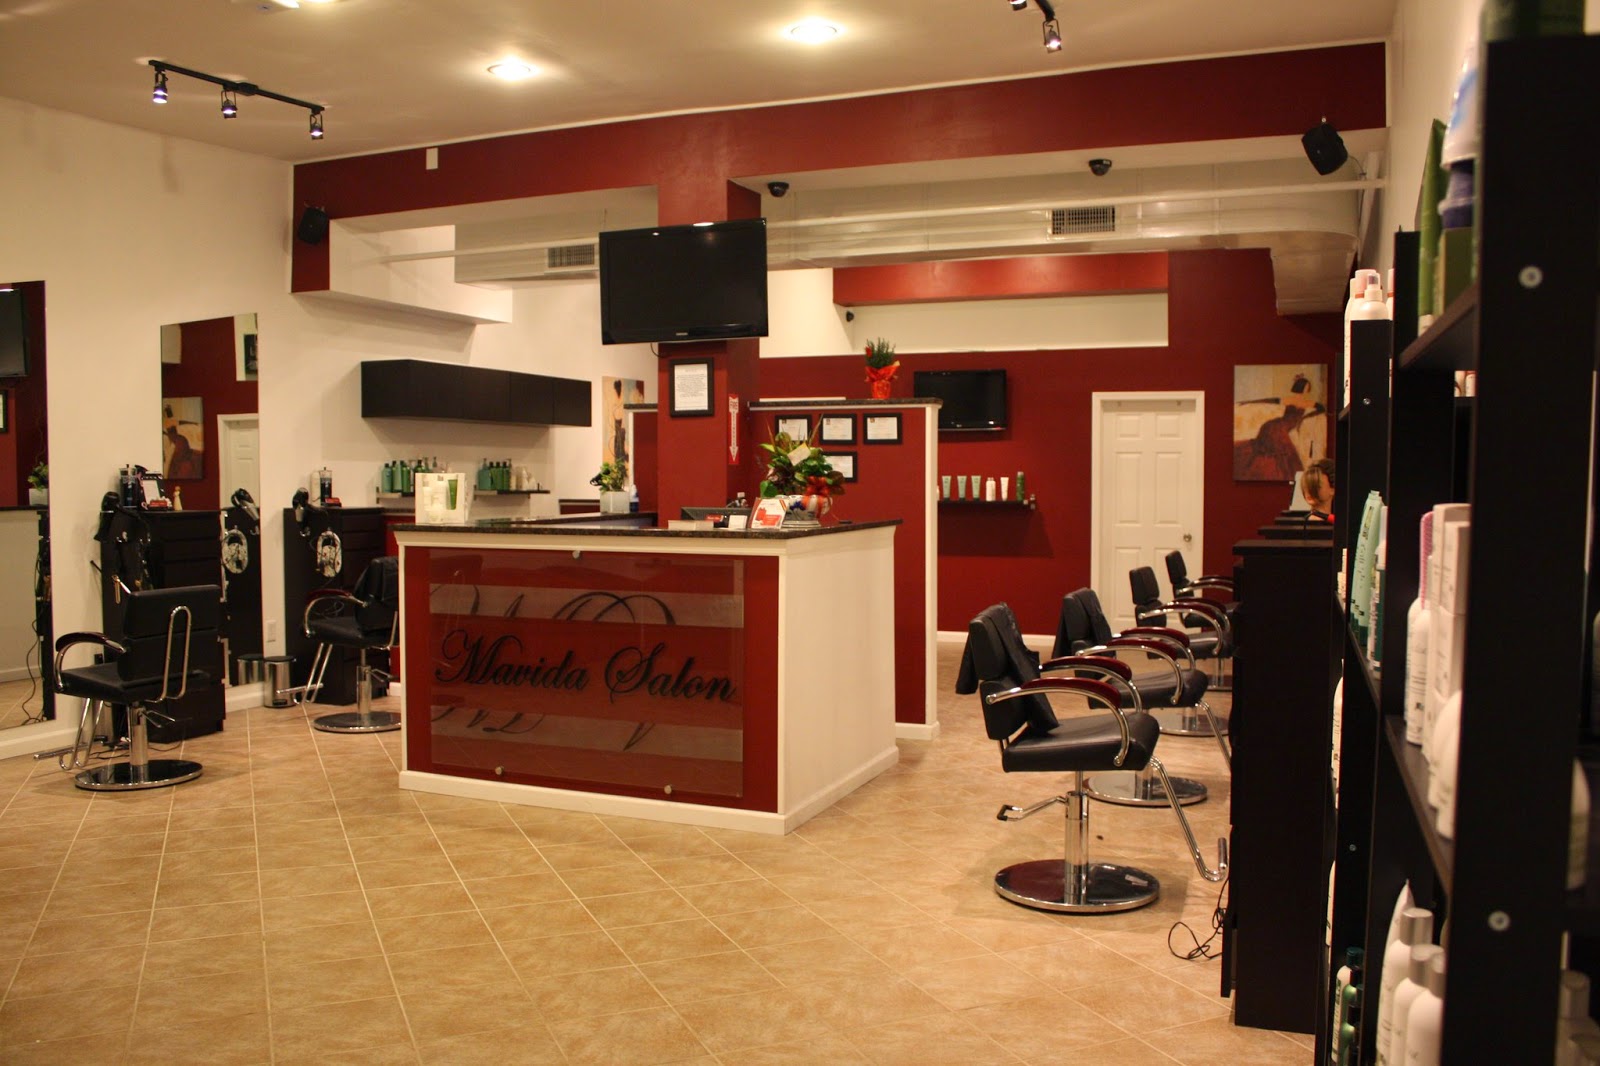 Photo of Mavida Salon in Lodi City, New Jersey, United States - 2 Picture of Point of interest, Establishment, Hair care